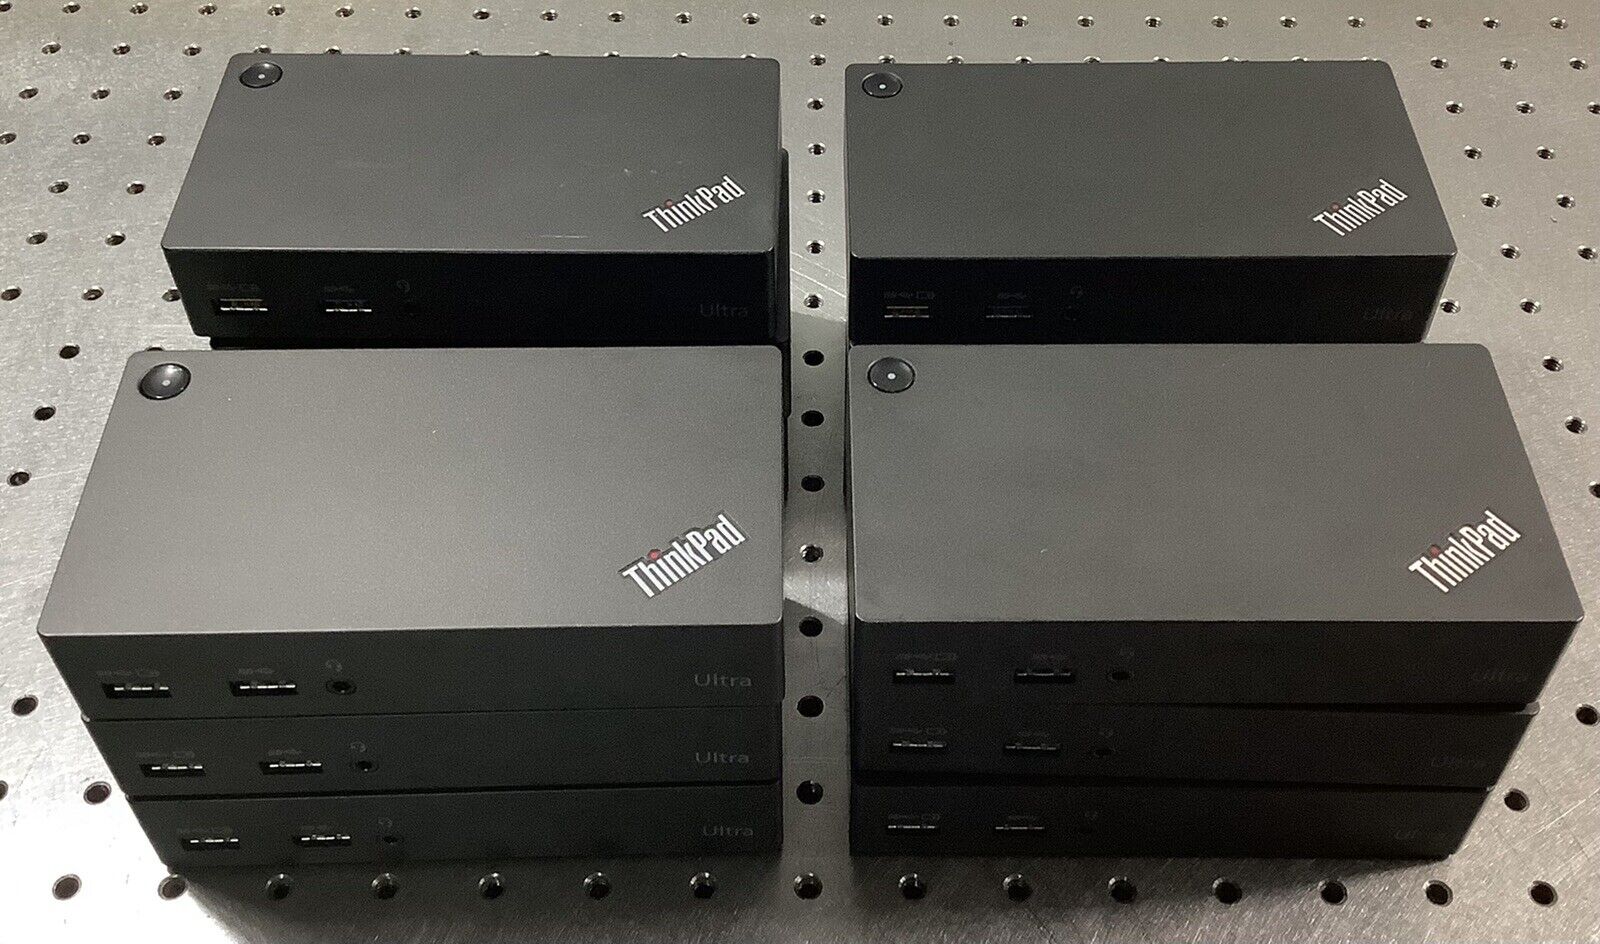 Lot of 12 Lenovo ThinkPad DK1523 Ultra DisplayLink USB 3.0 Docking Station